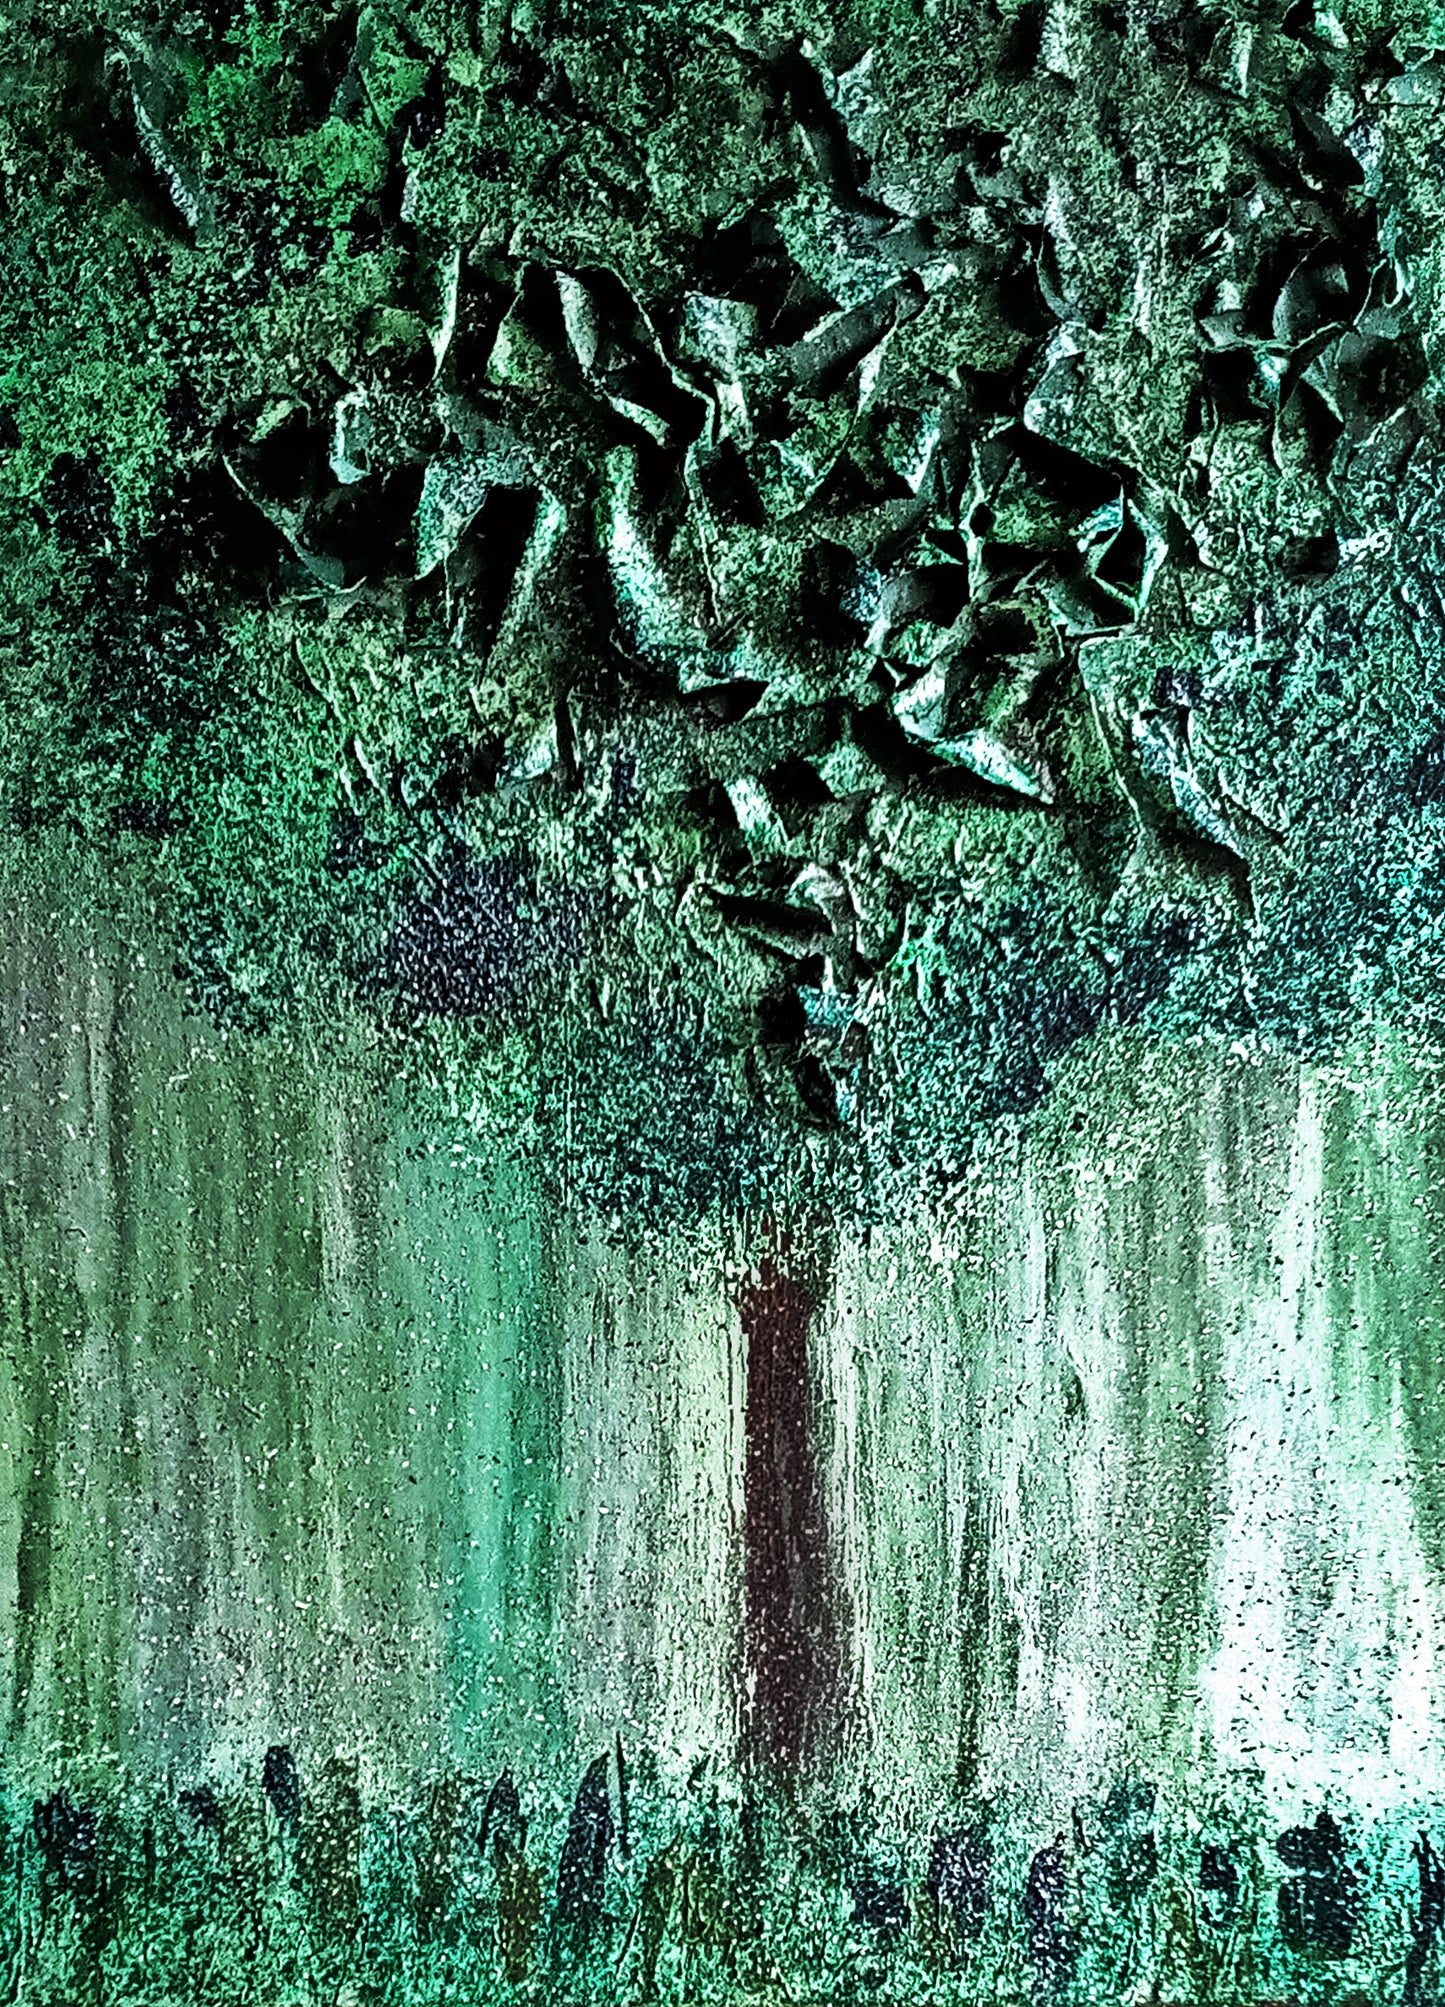 The Tree 3D Art 18"x24" on Canvas